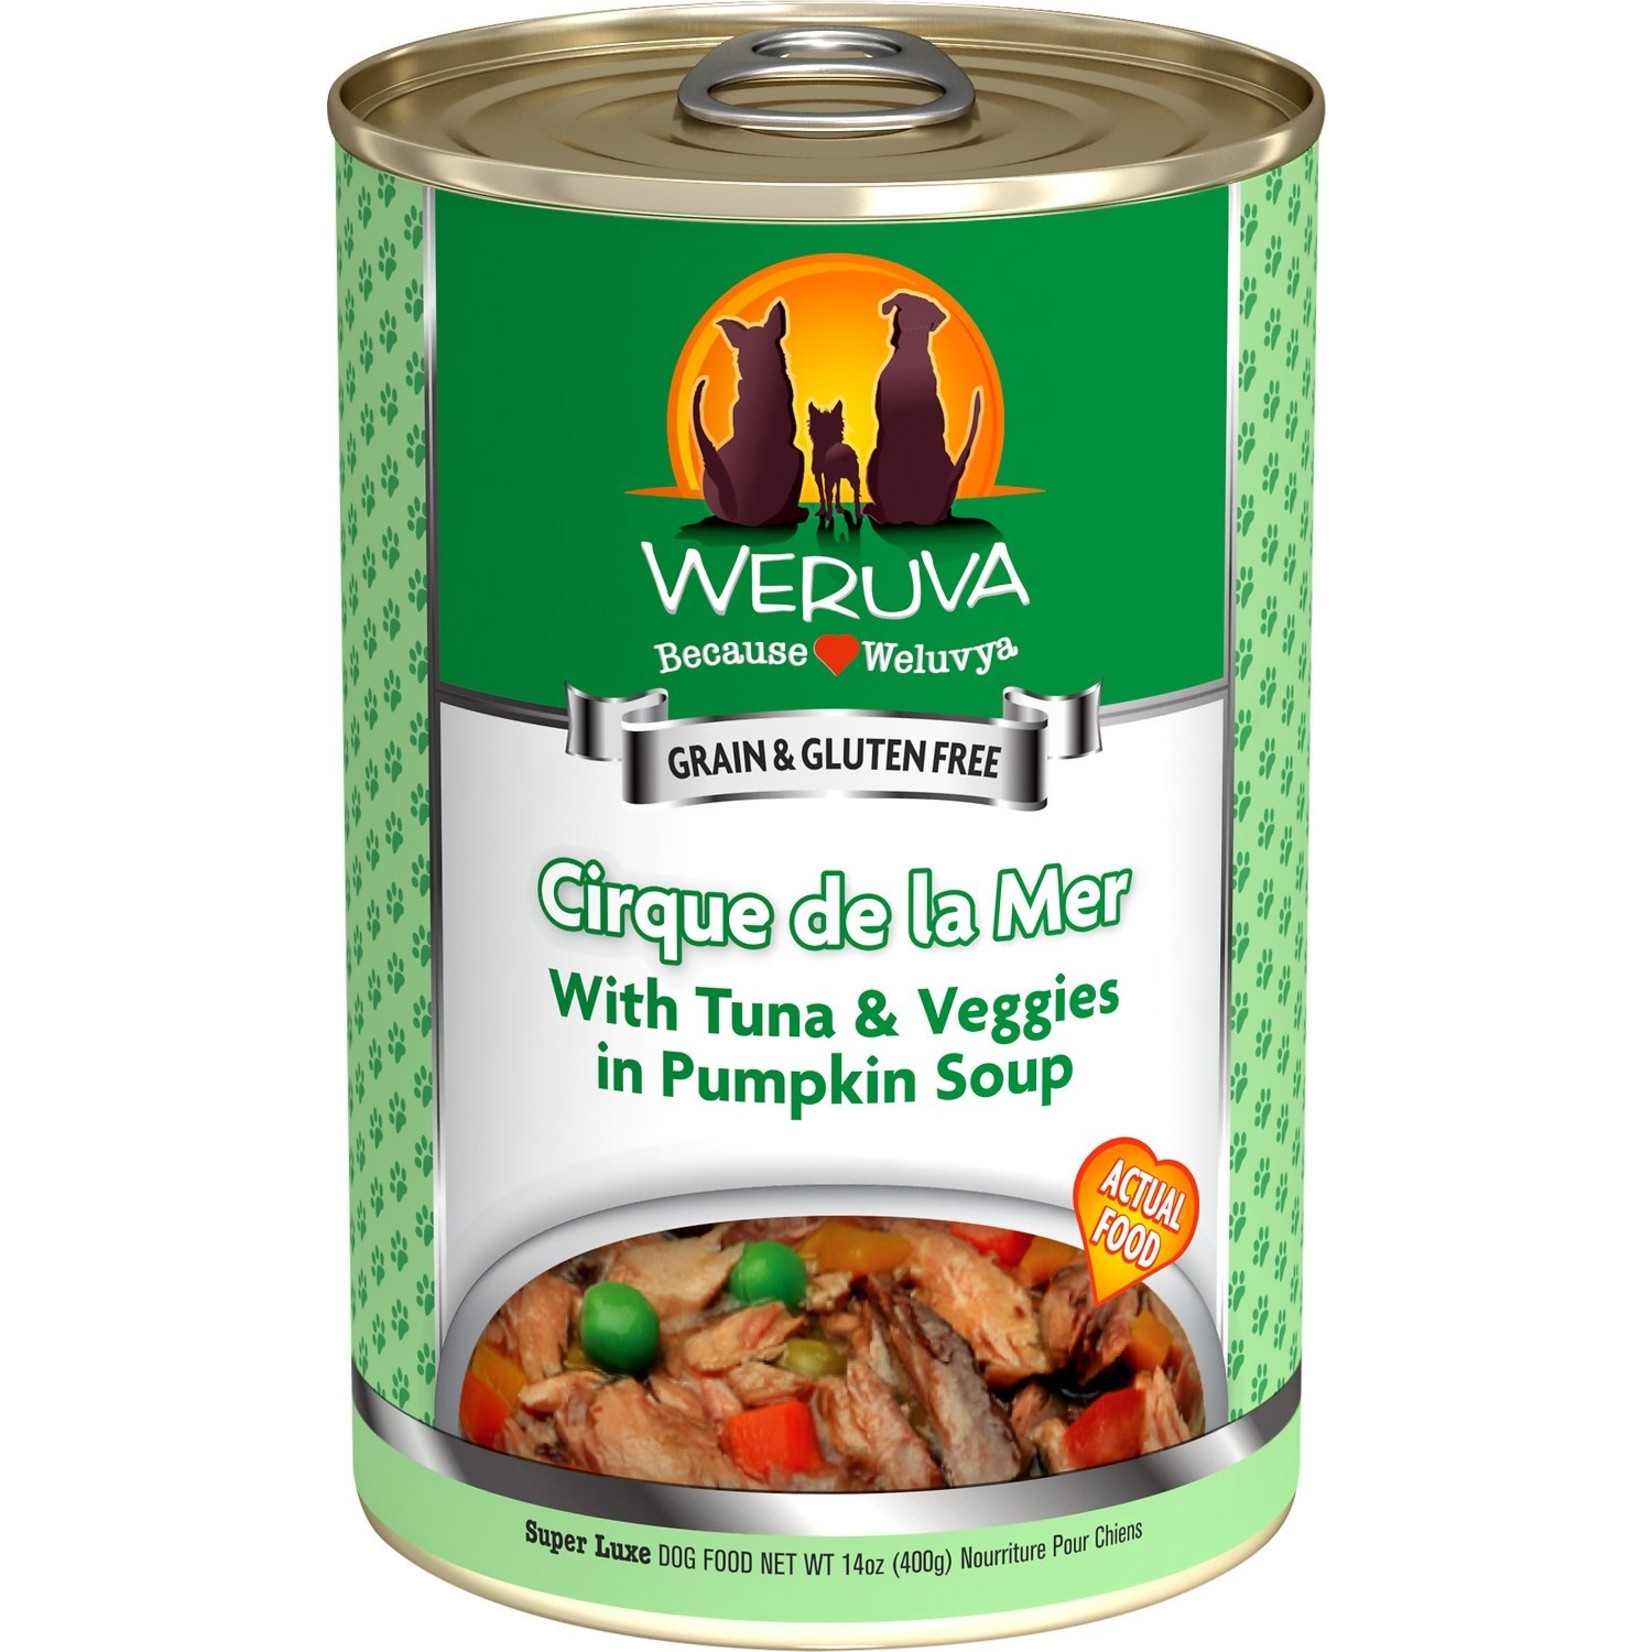 Weruva Weruva Classic Dog - Cirque de la Mer with Tuna & Veggies in Pumpkin Soup